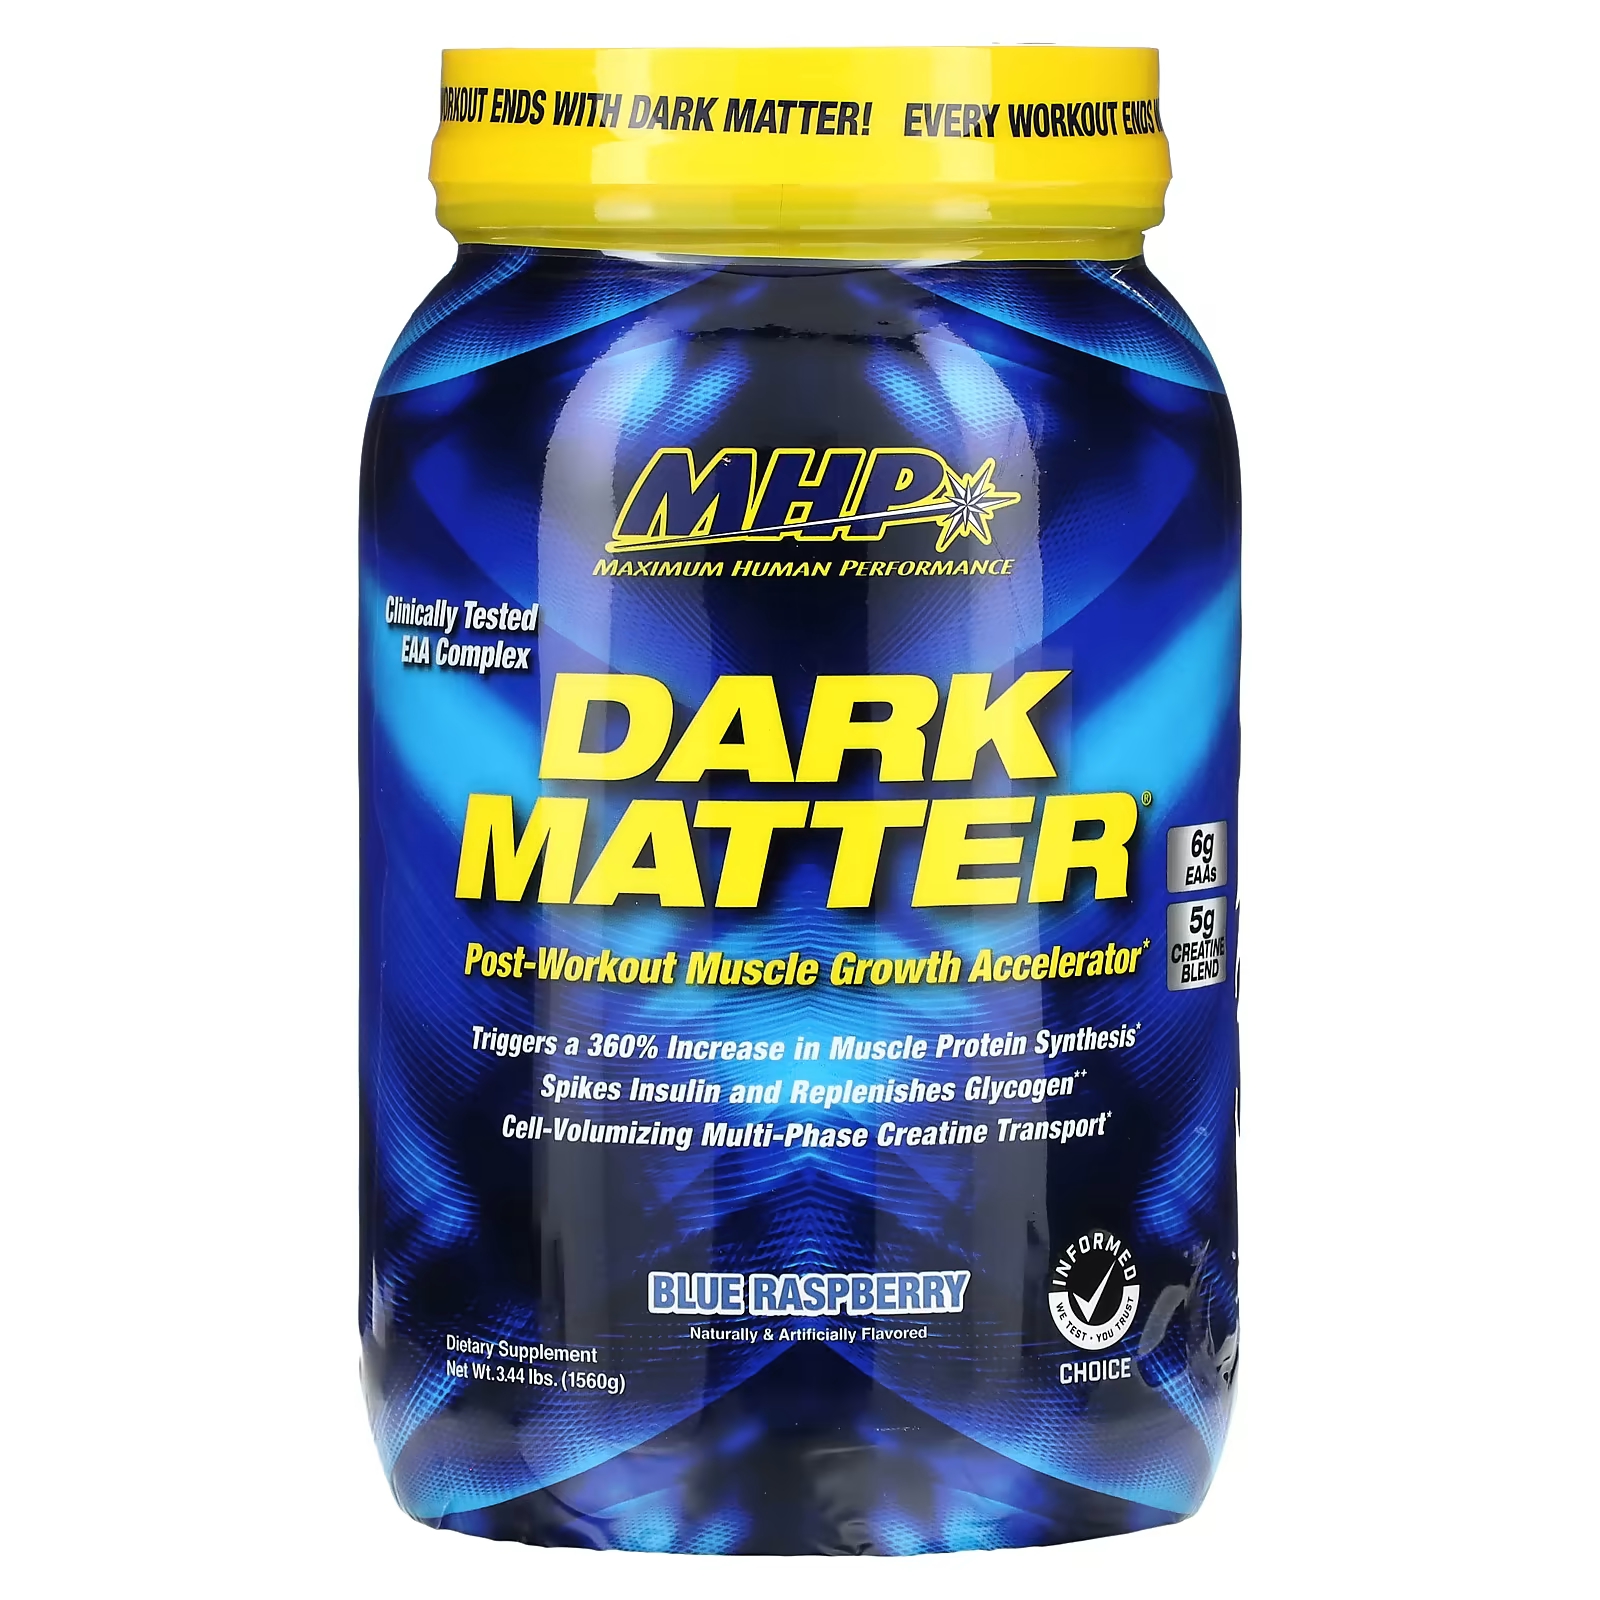 Ускоритель роста мышц после тренировки Mhp Dark Matter голубая малина, 1560 г mhp dark matter ускоритель роста мышц после тренировки голубая малина 1560 г 3 44 фунта